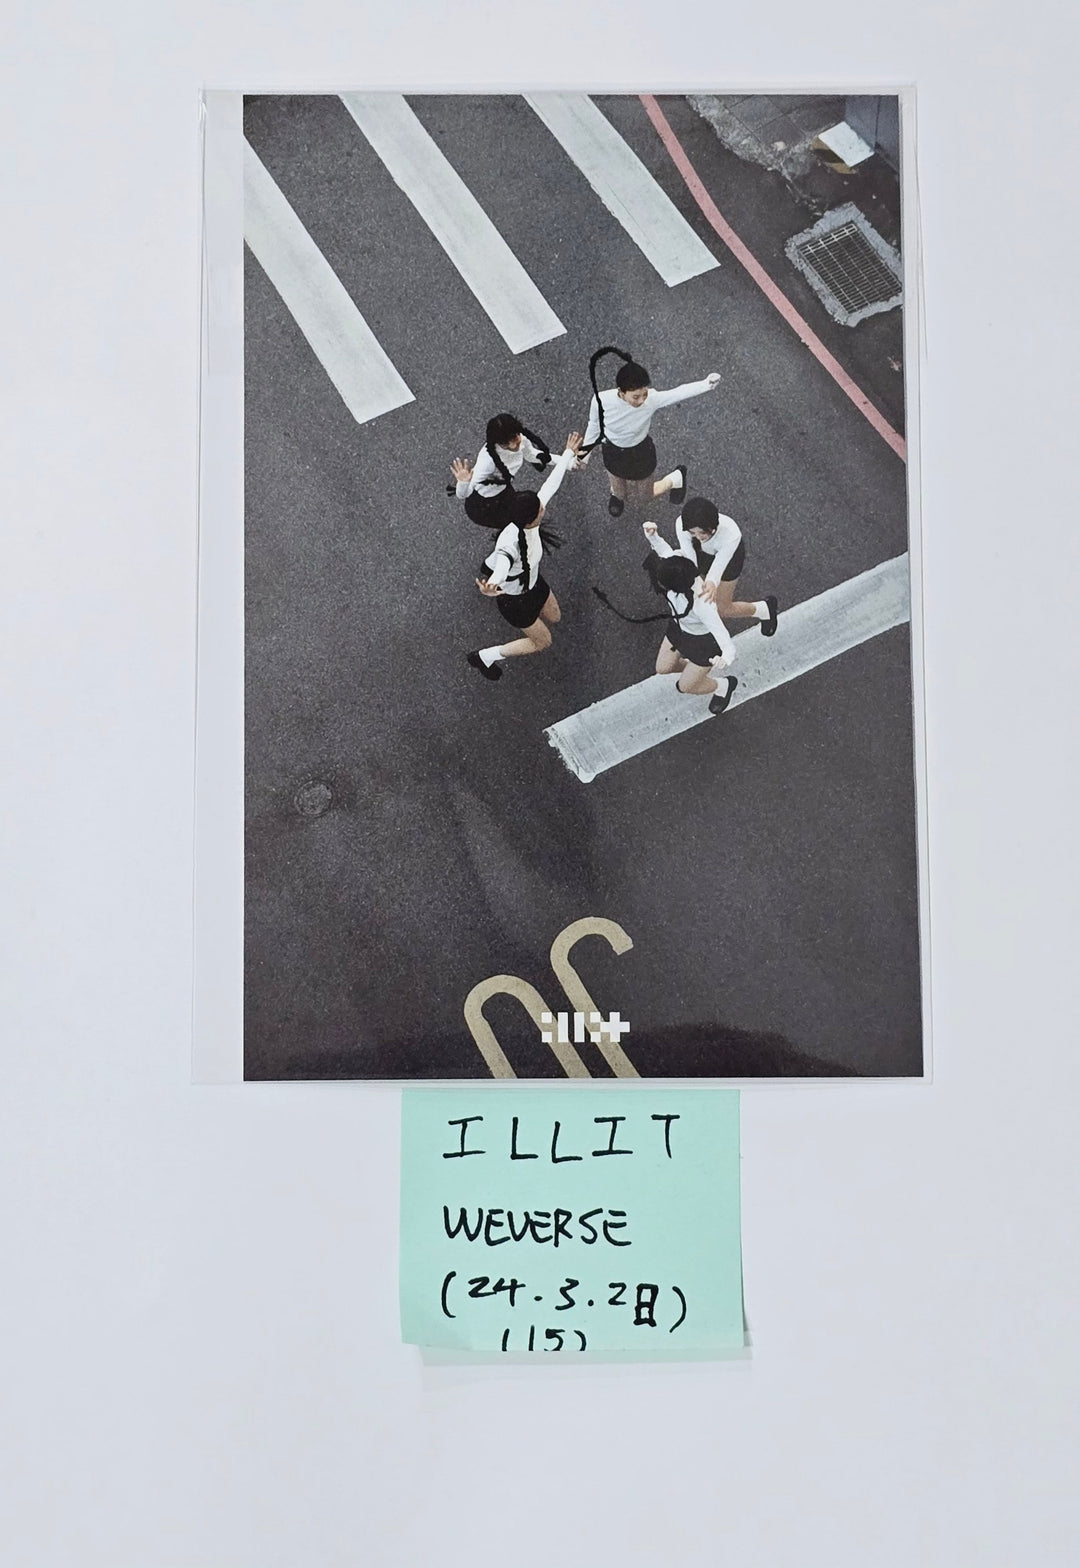 ILLIT「SUPER REAL ME」 - Weverse Shop 予約特典ポストカード [24.3.28]